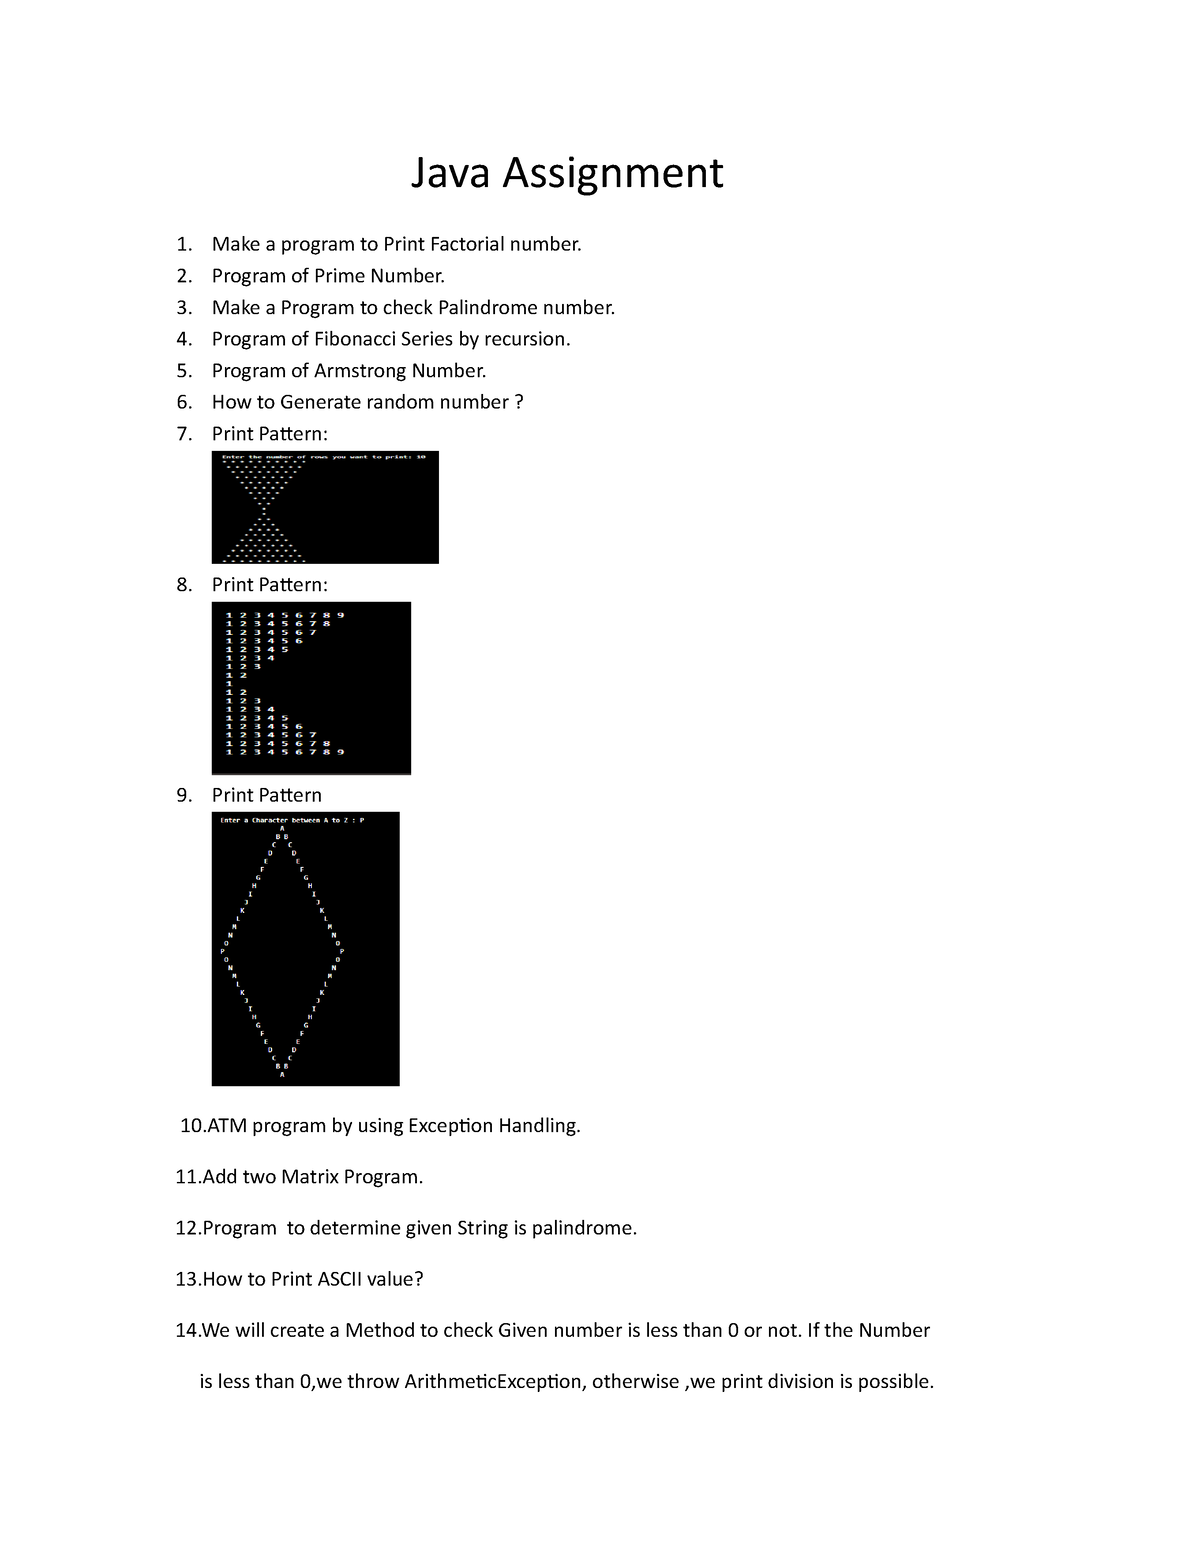 java assignment questions pdf